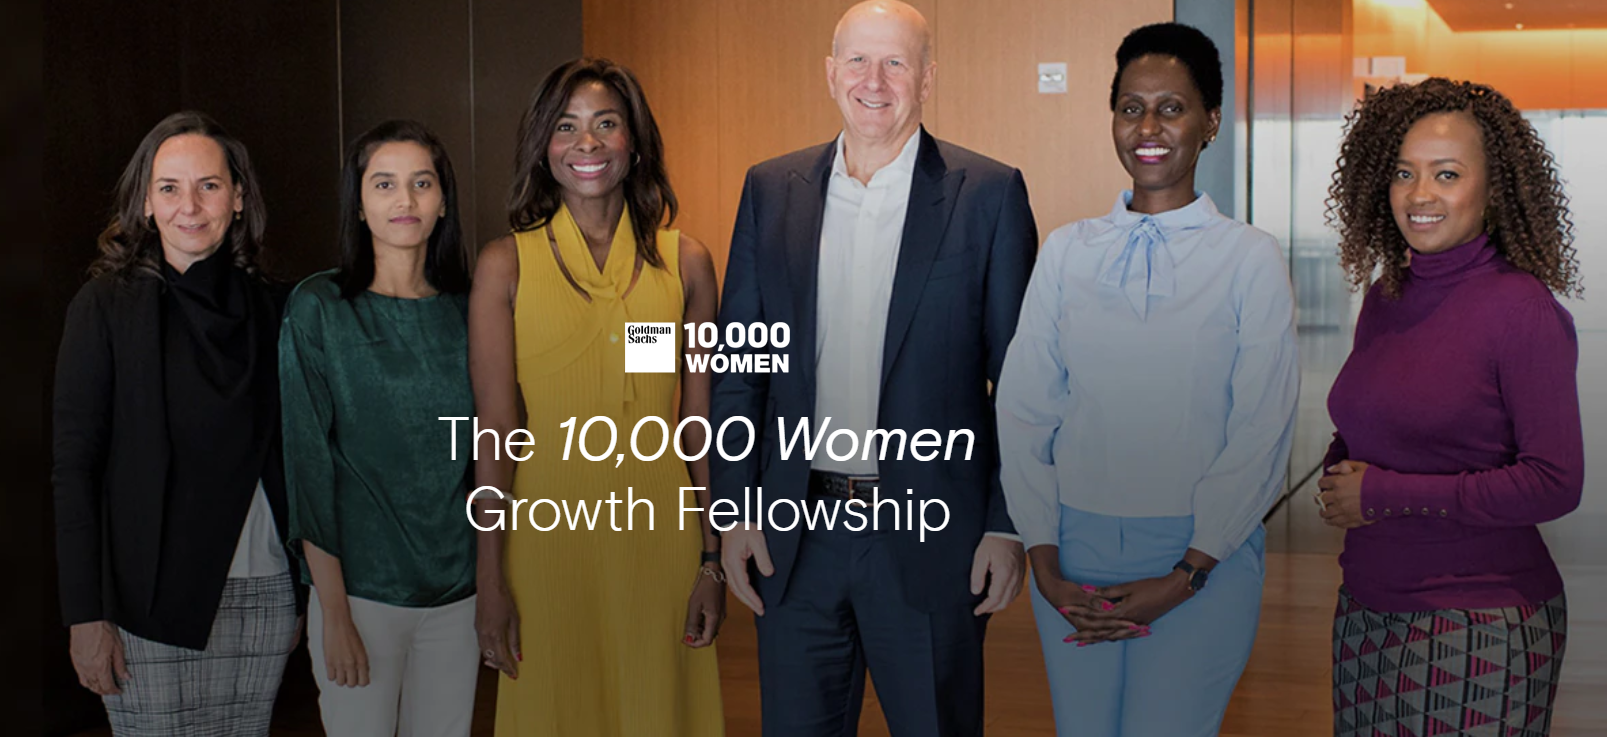 GoldmanSachs 10,000 Women Growth Fellowship 2023 for Women Entrepreneurs